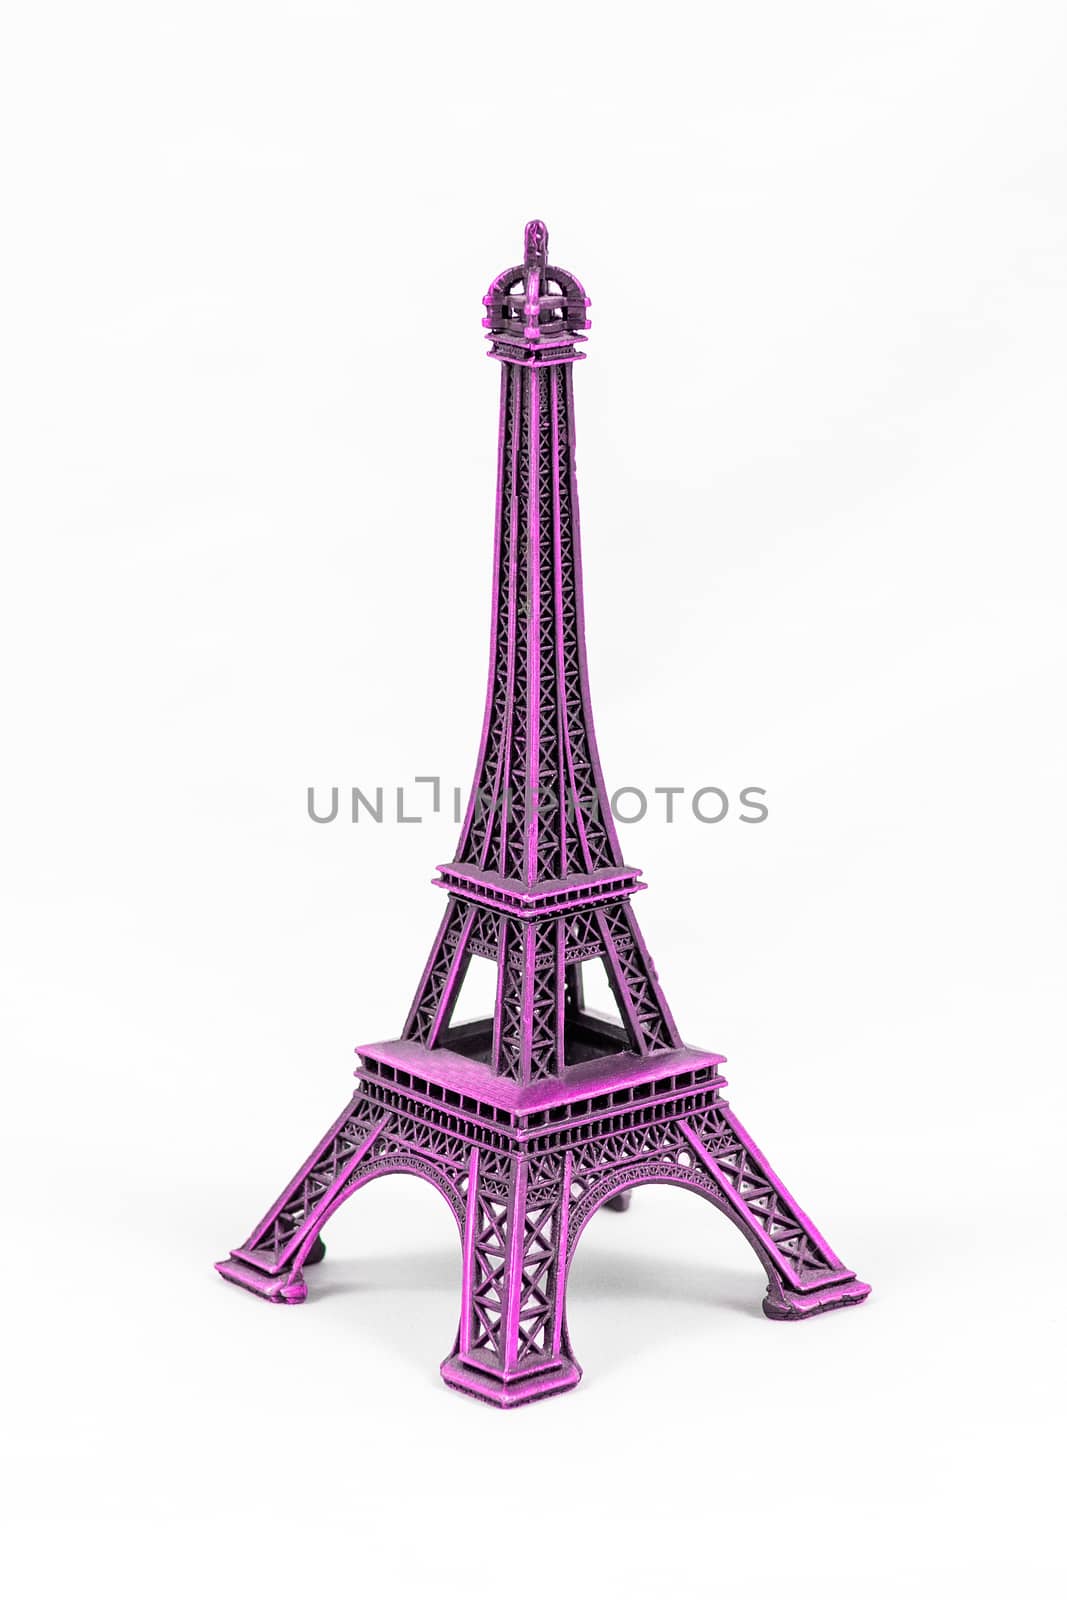 Purple Eiffel Tower model, isolated on white background by marcorubino